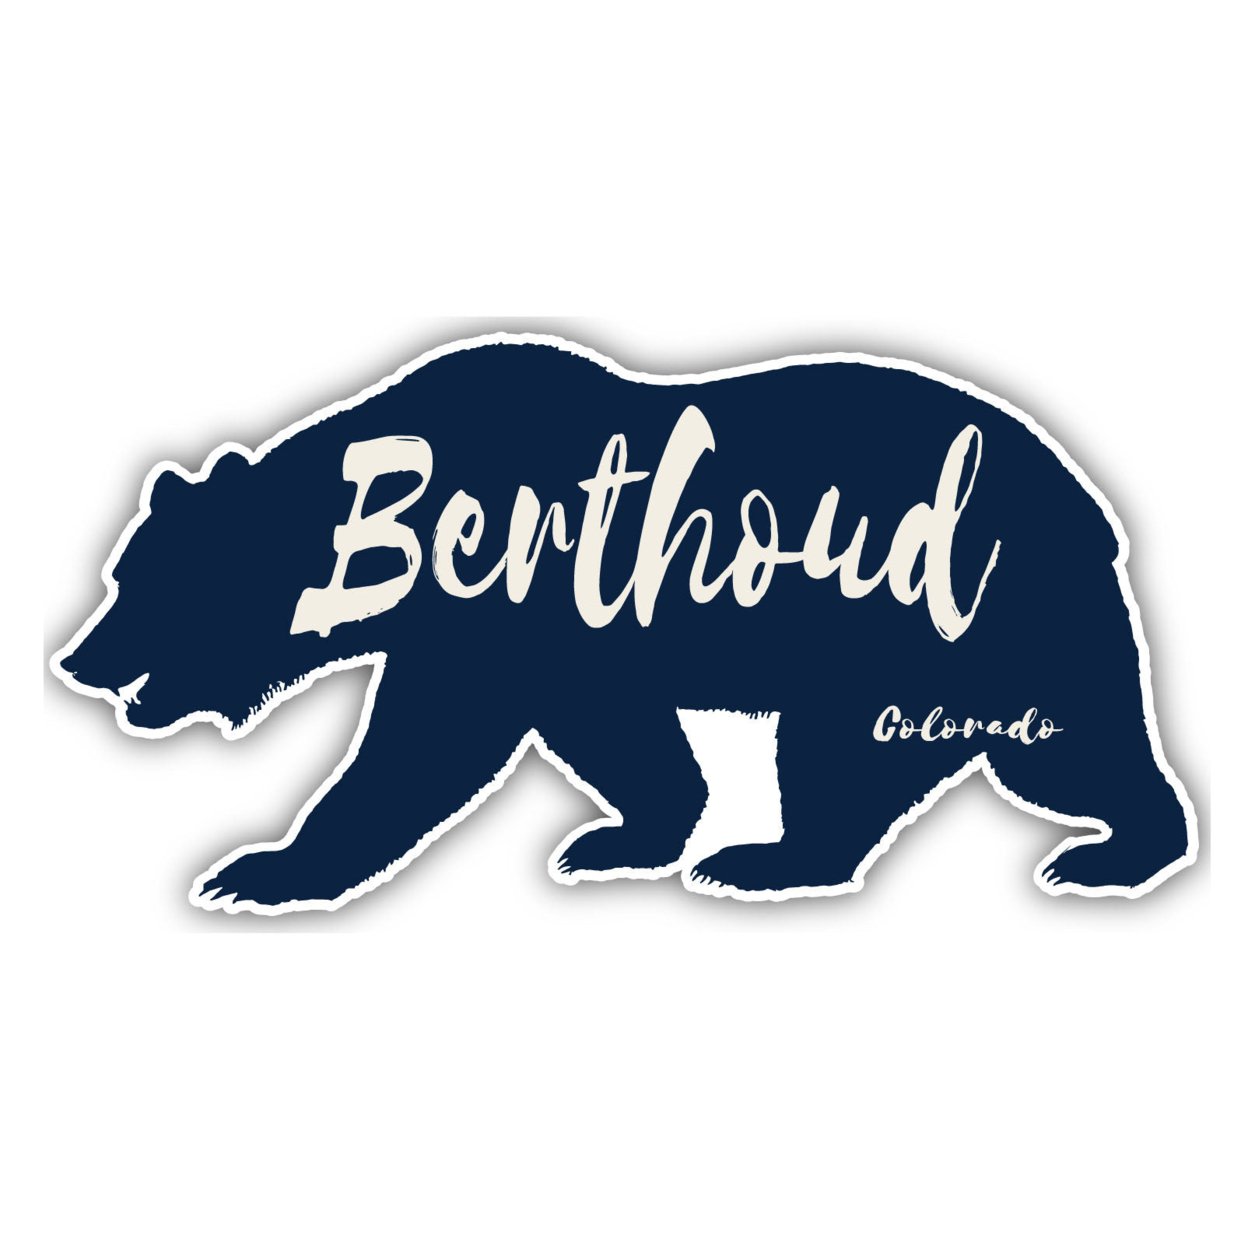 Berthoud Colorado Souvenir Decorative Stickers (Choose Theme And Size) - Single Unit, 8-Inch, Tent